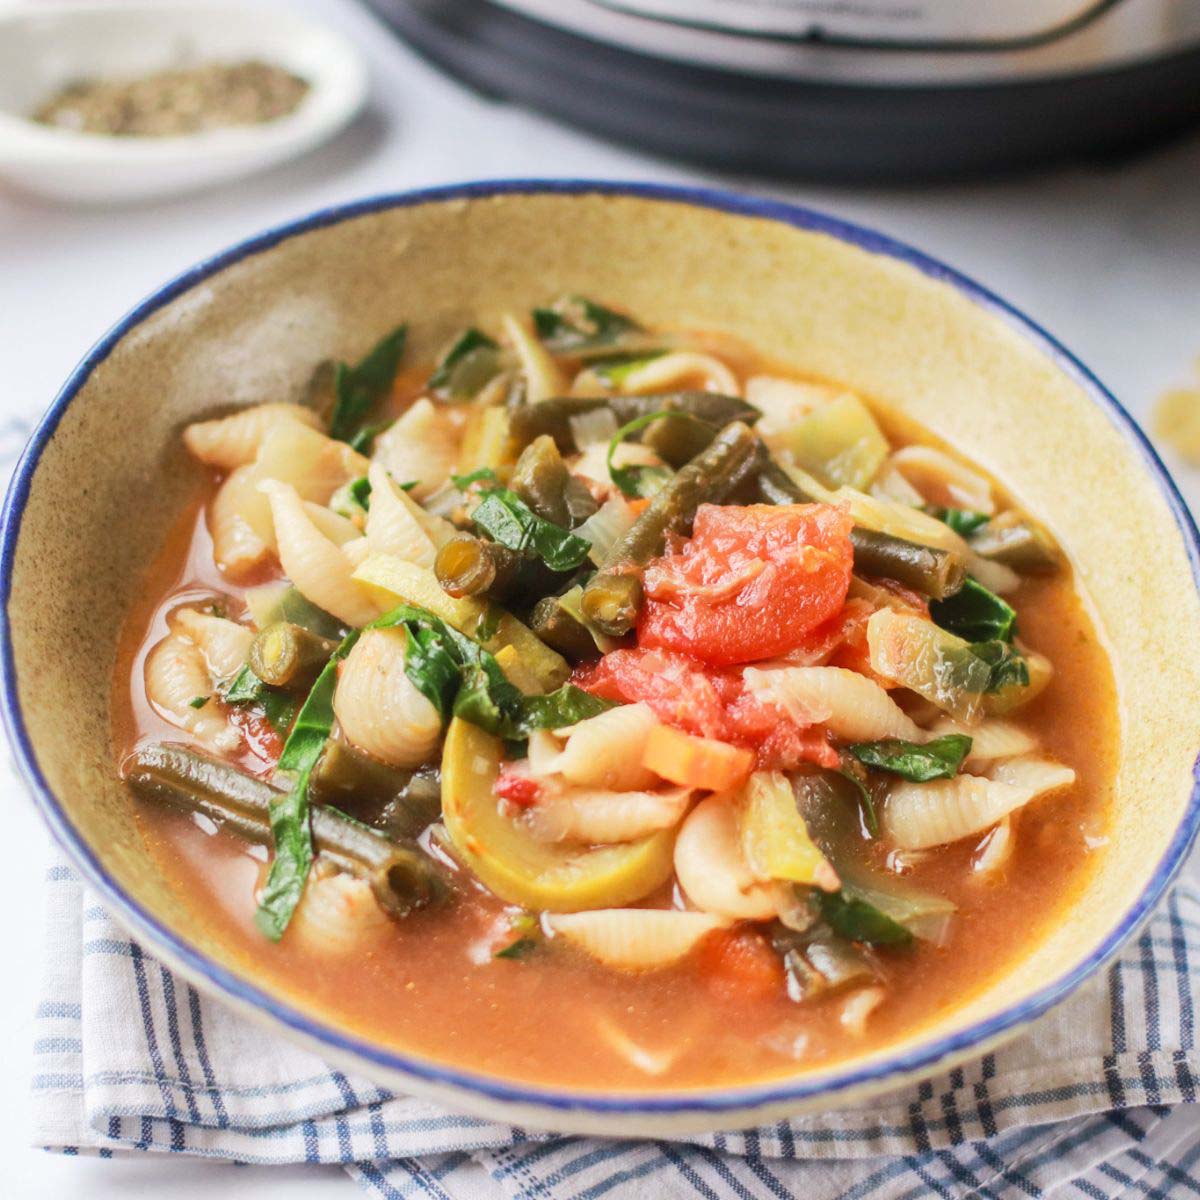 https://www.simplylowcal.com/wp-content/uploads/2022/12/instant-pot-vegetable-soup-with-pasta-thumbnail.jpg